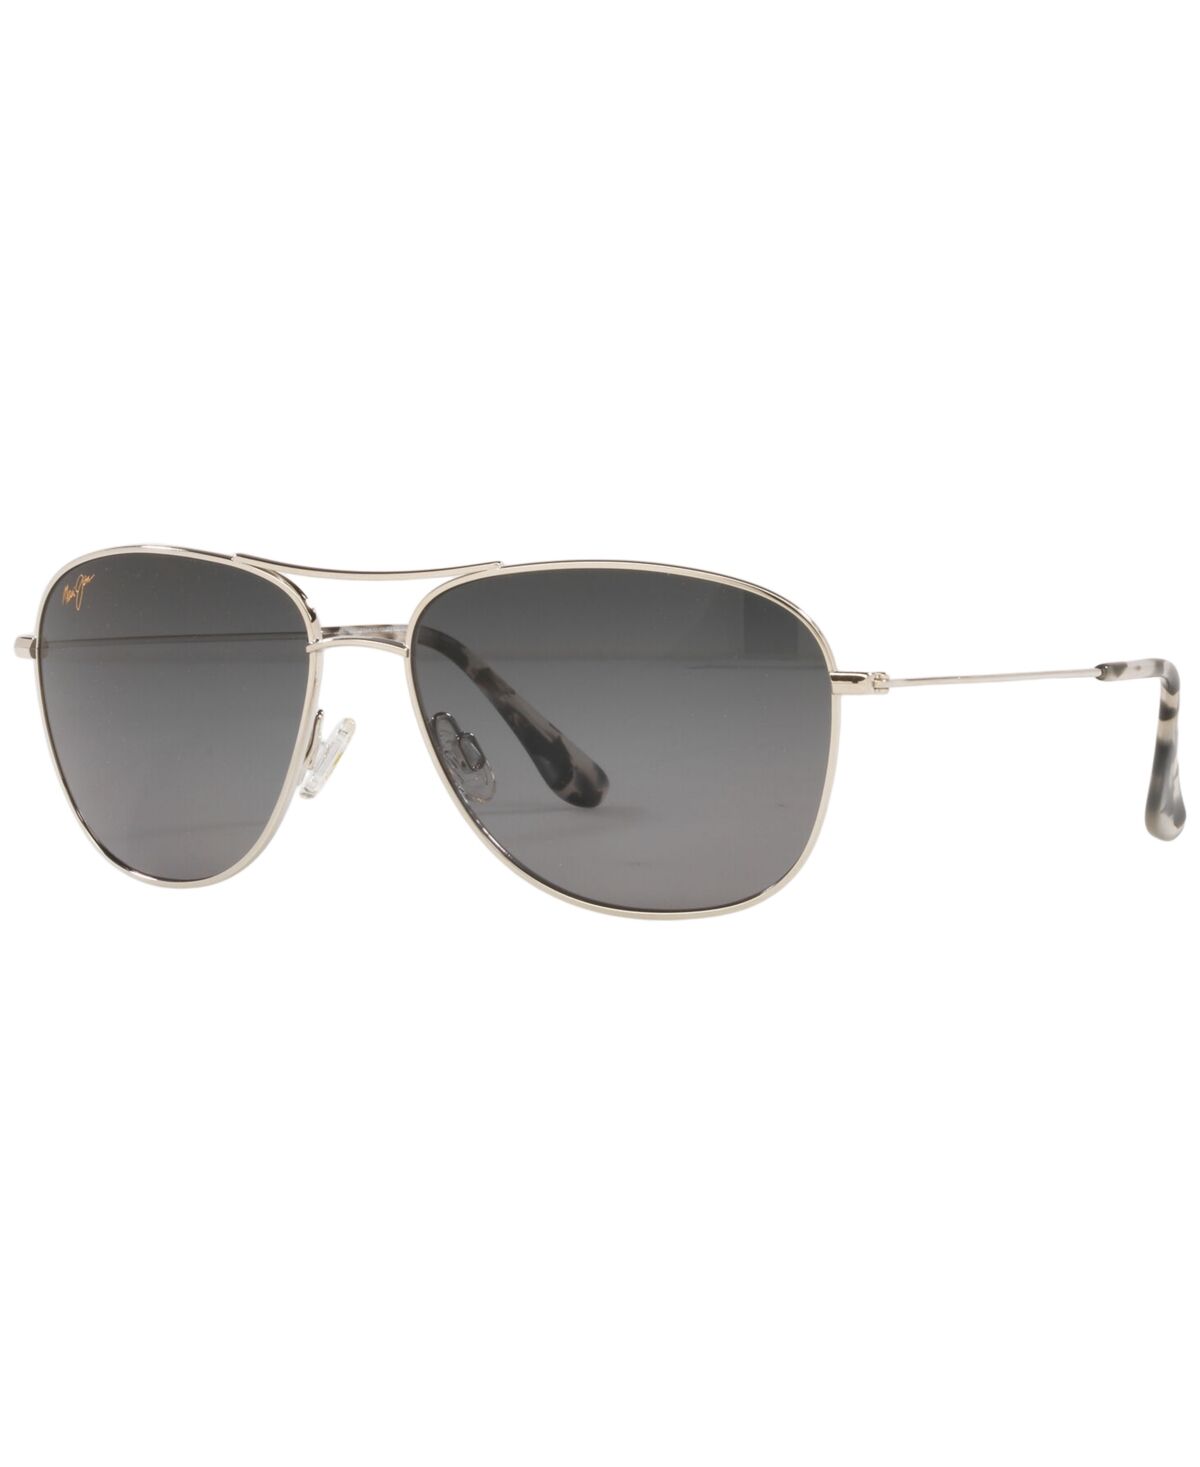 Maui Jim Polarized Cliffhouse Sunglasses, MJ000360 - Silver/Grey